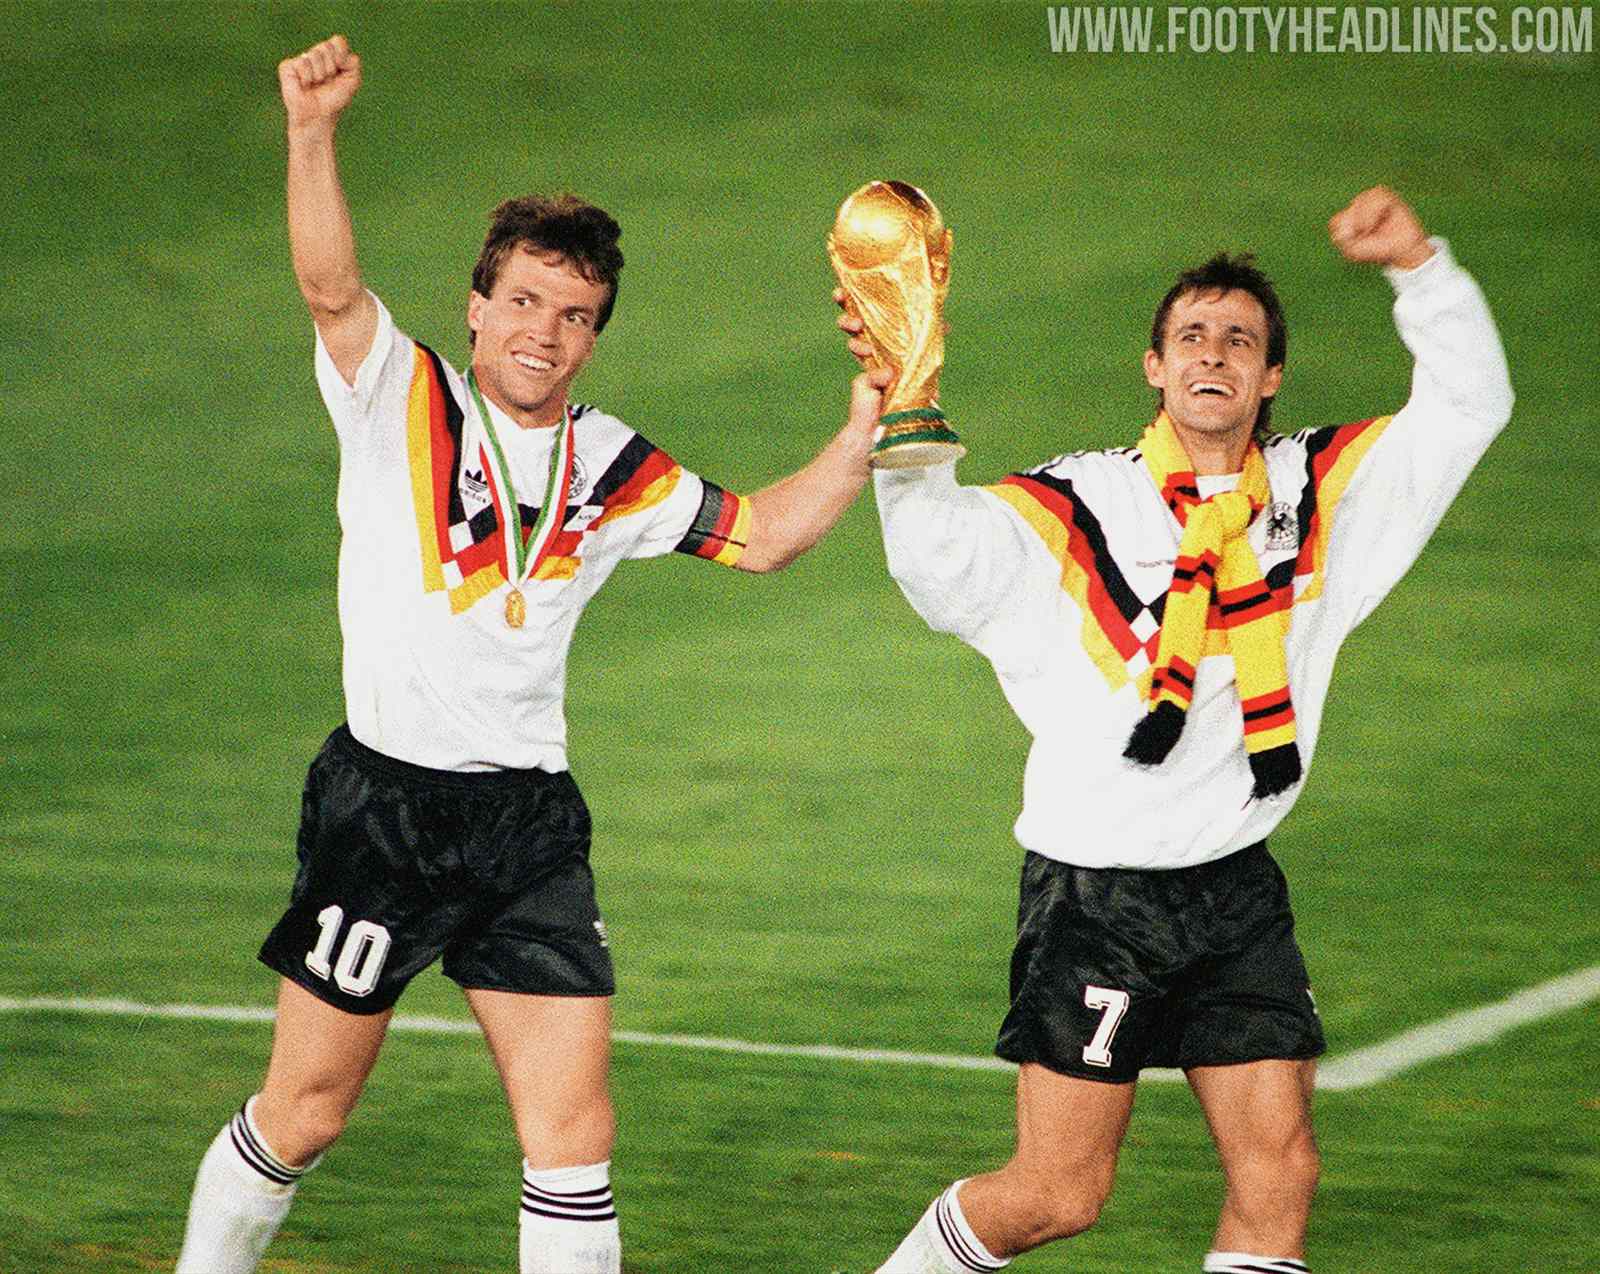 Germany Away football shirt 1990 - 1991.